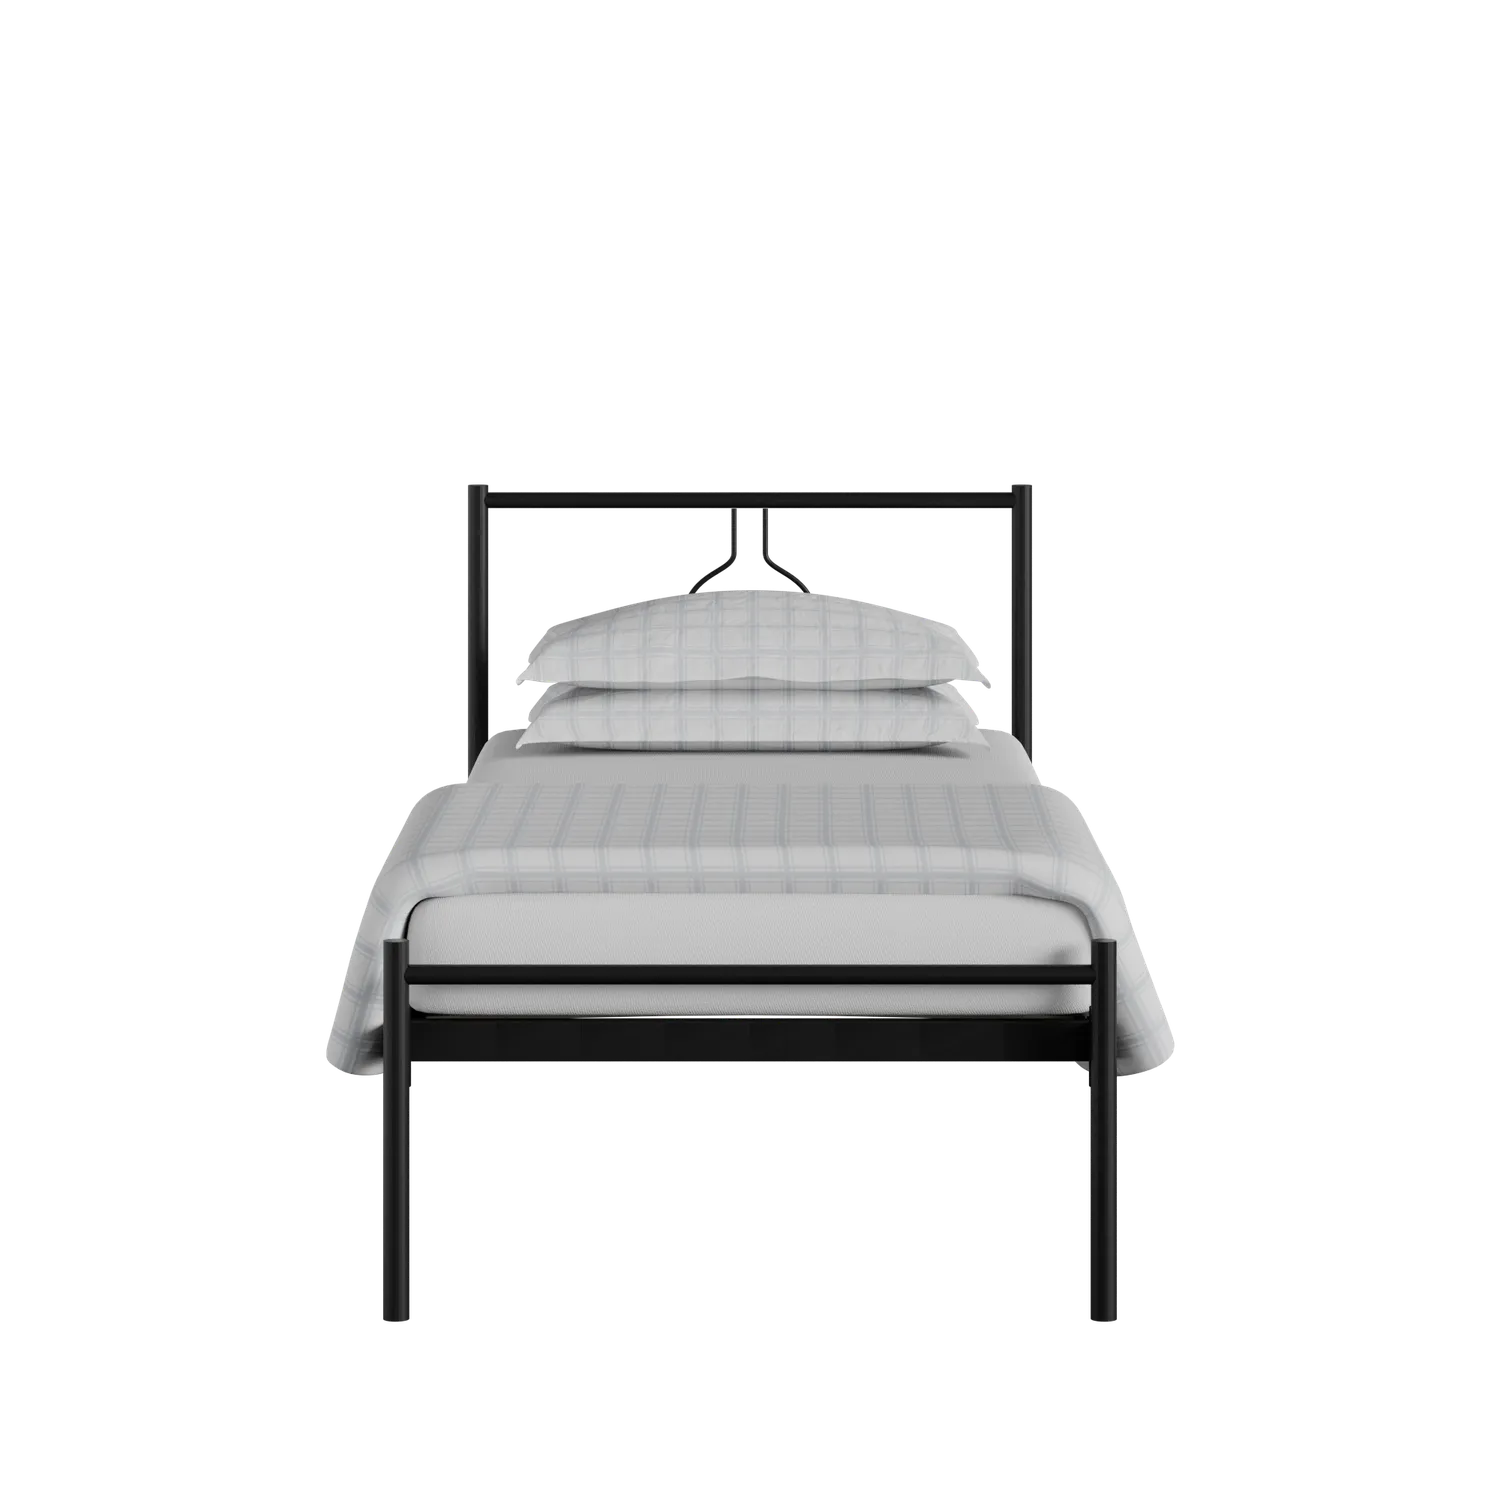 Meiji cama individual de metal en negro